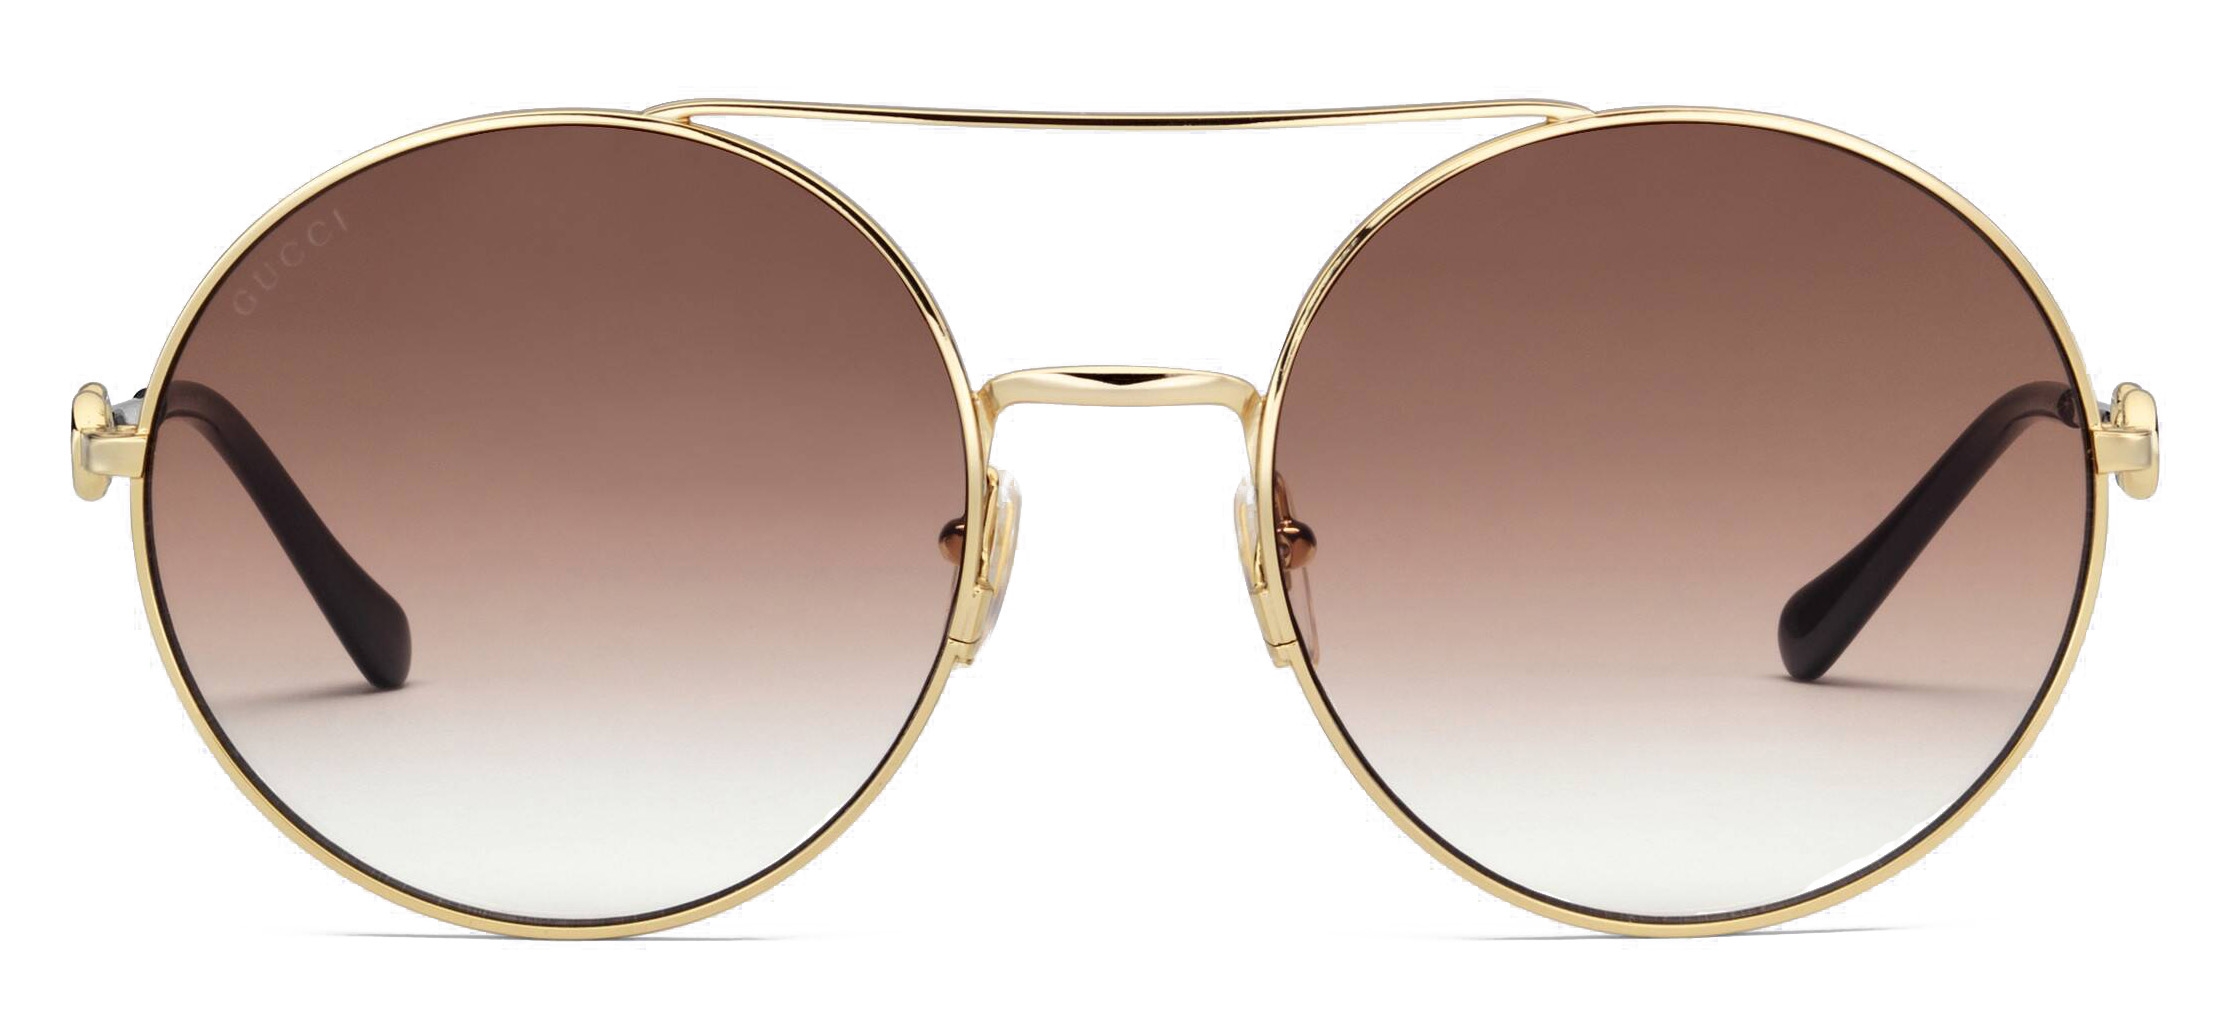 Gucci - Round Sunglasses - Gold Brown Orange - Gucci Eyewear - Avvenice